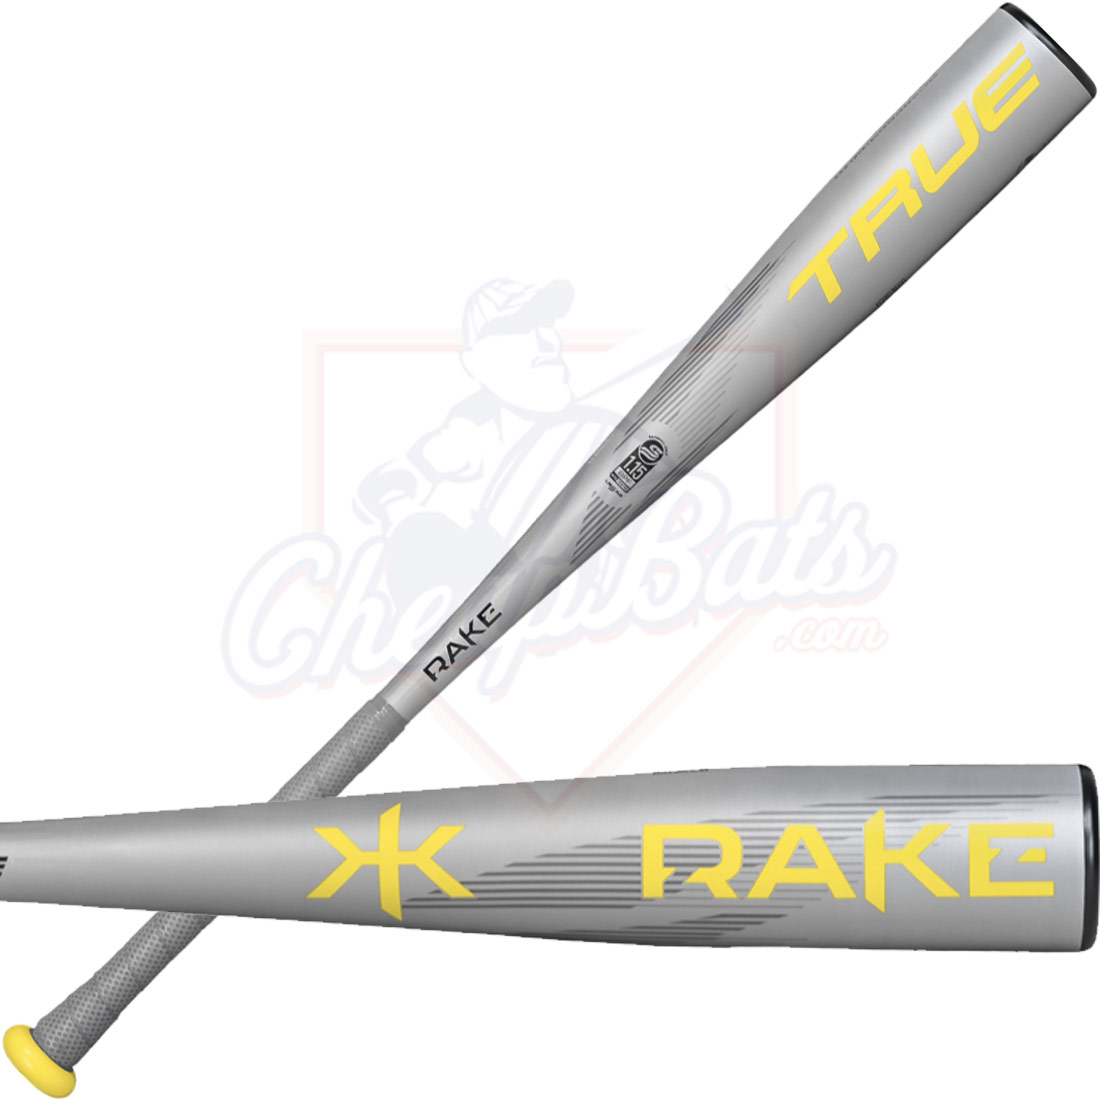 True Temper Rake Youth USSSA Baseball Bat -5oz UT-22-RKE-X-5